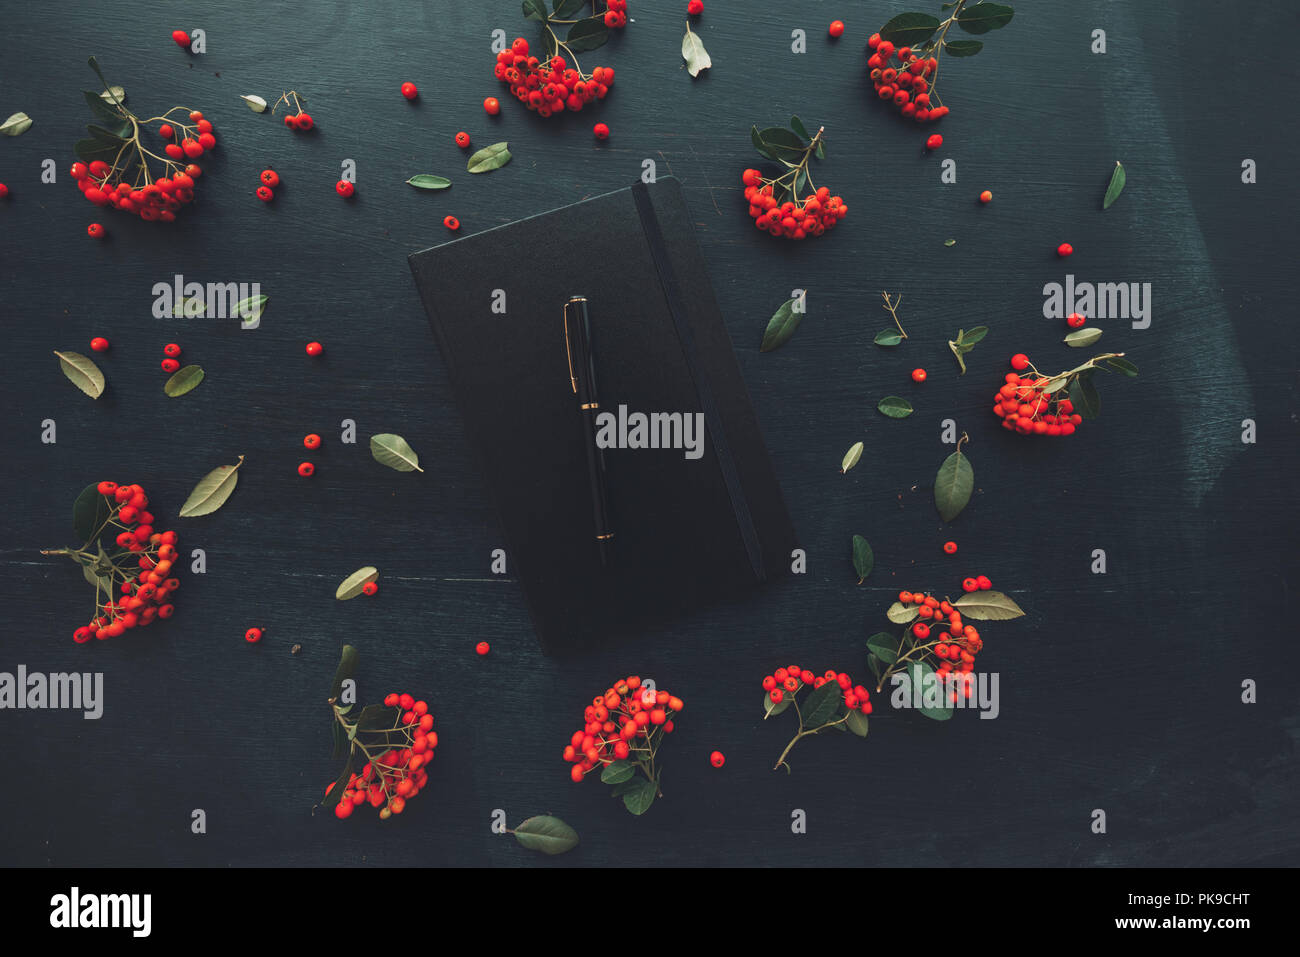 Closed black moleskin notebook flat lay on dark office desk decorated with wild berry fruit arrangement Stock Photo